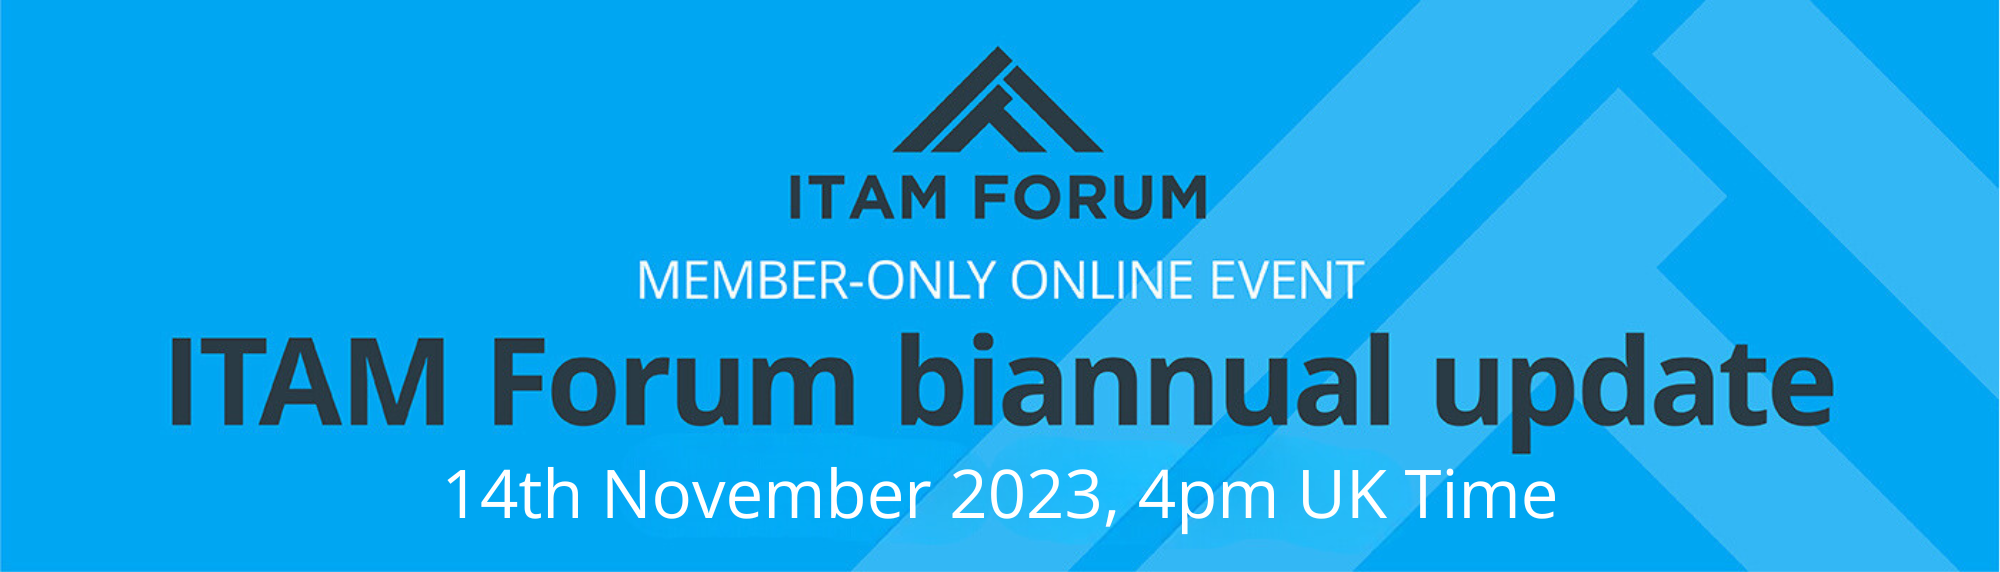 Webinar-ITAM-Forum-Community-Update-Banners-proof1